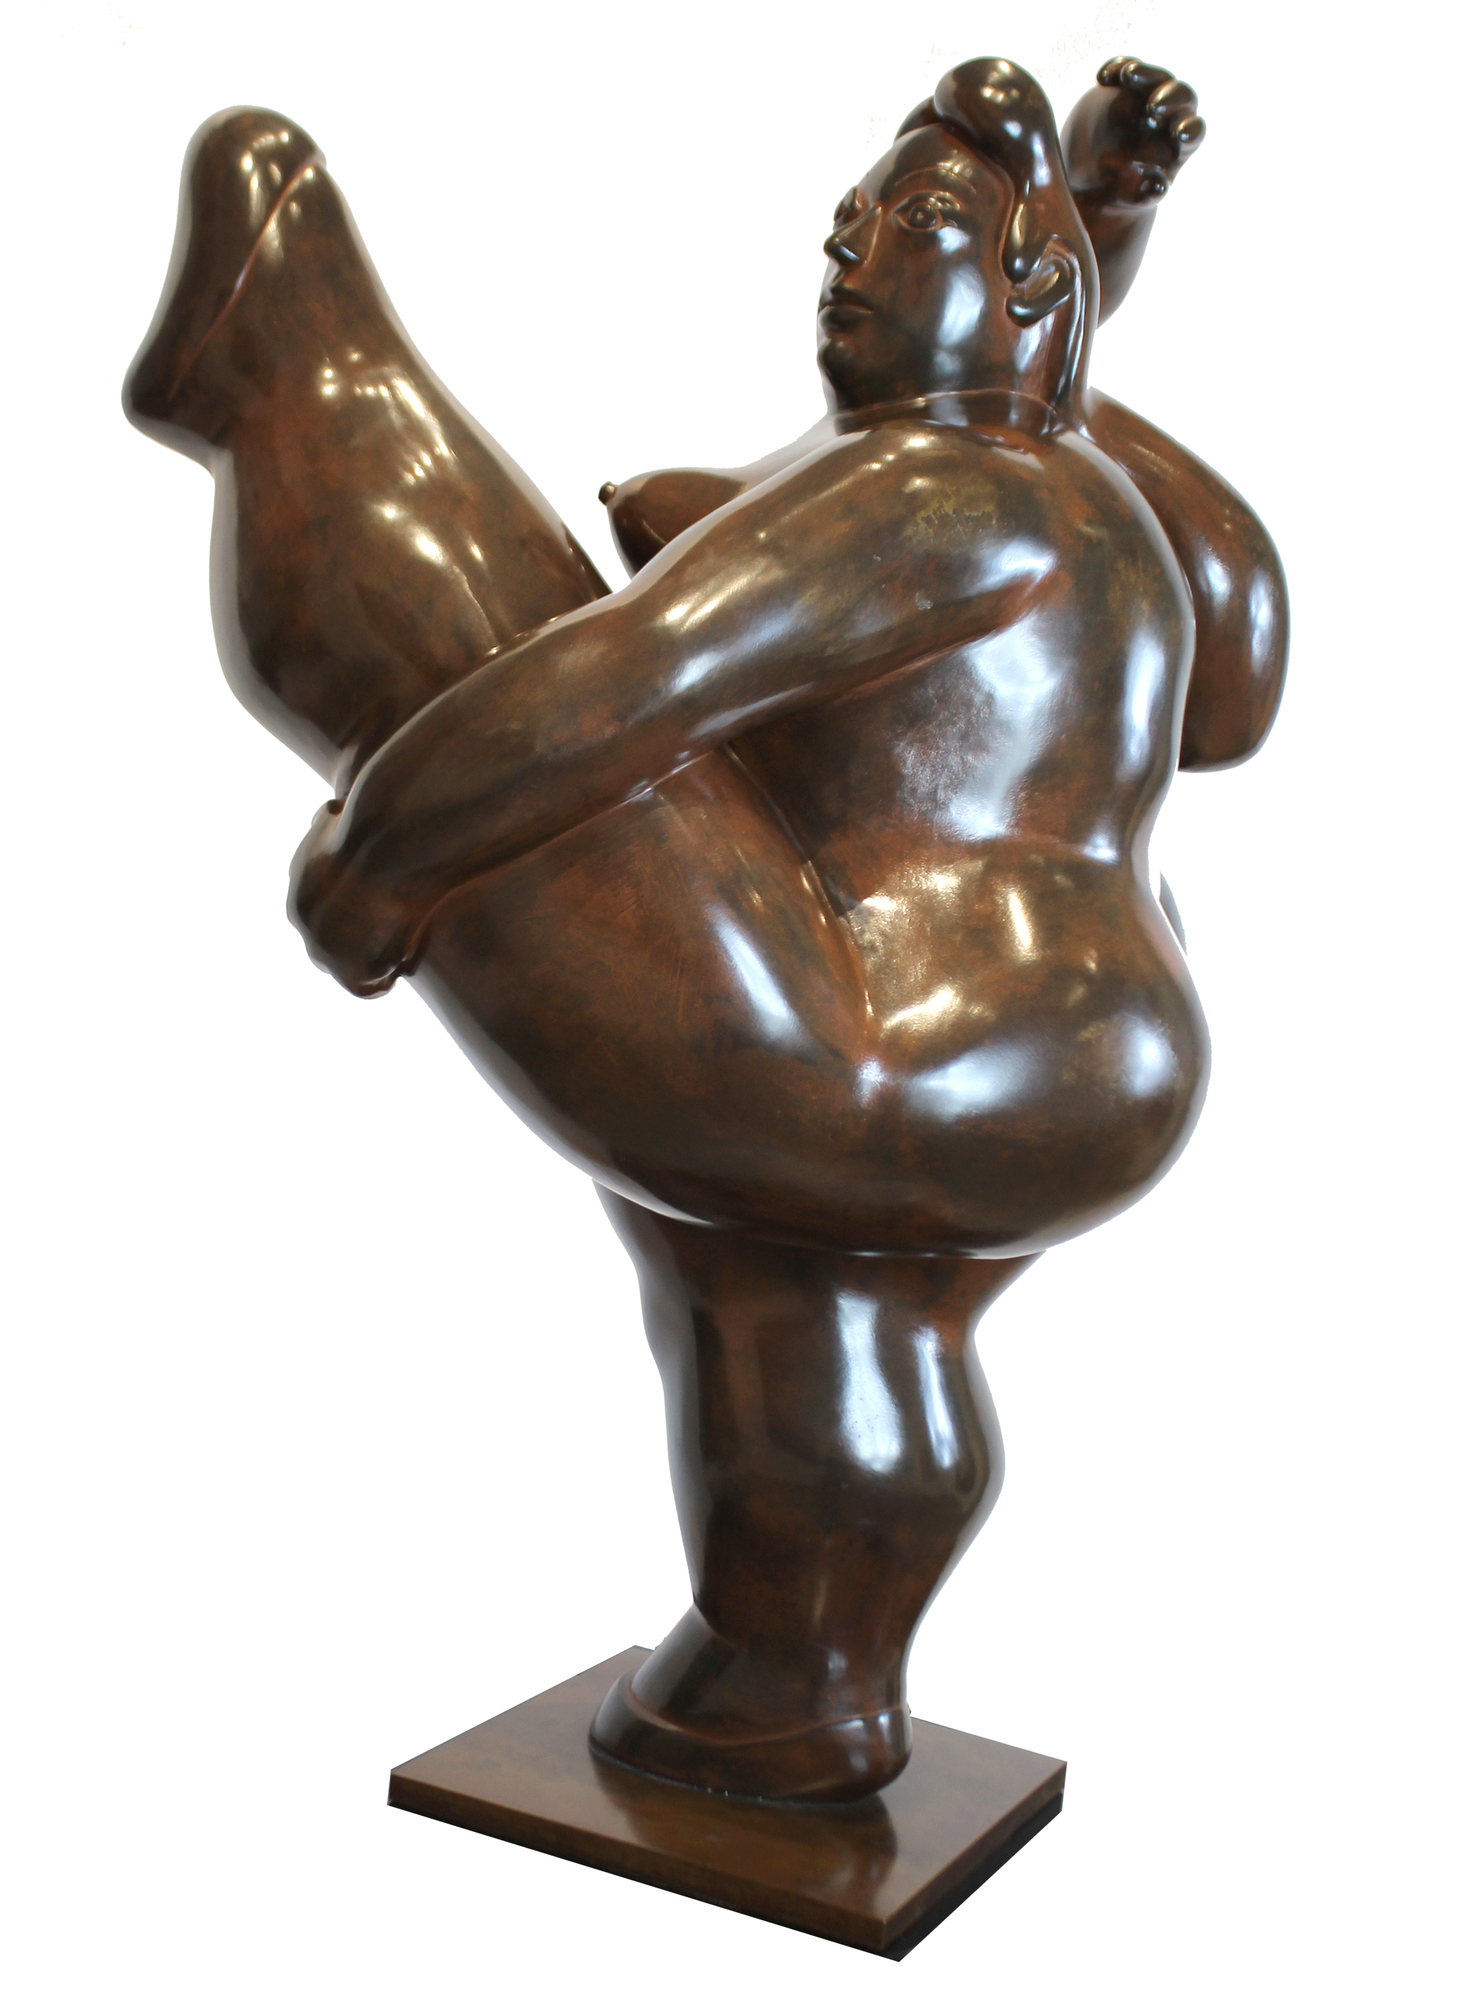 FERNANDO BOTERO - Ballerina - bronze - 41 x 24 x 24 in.